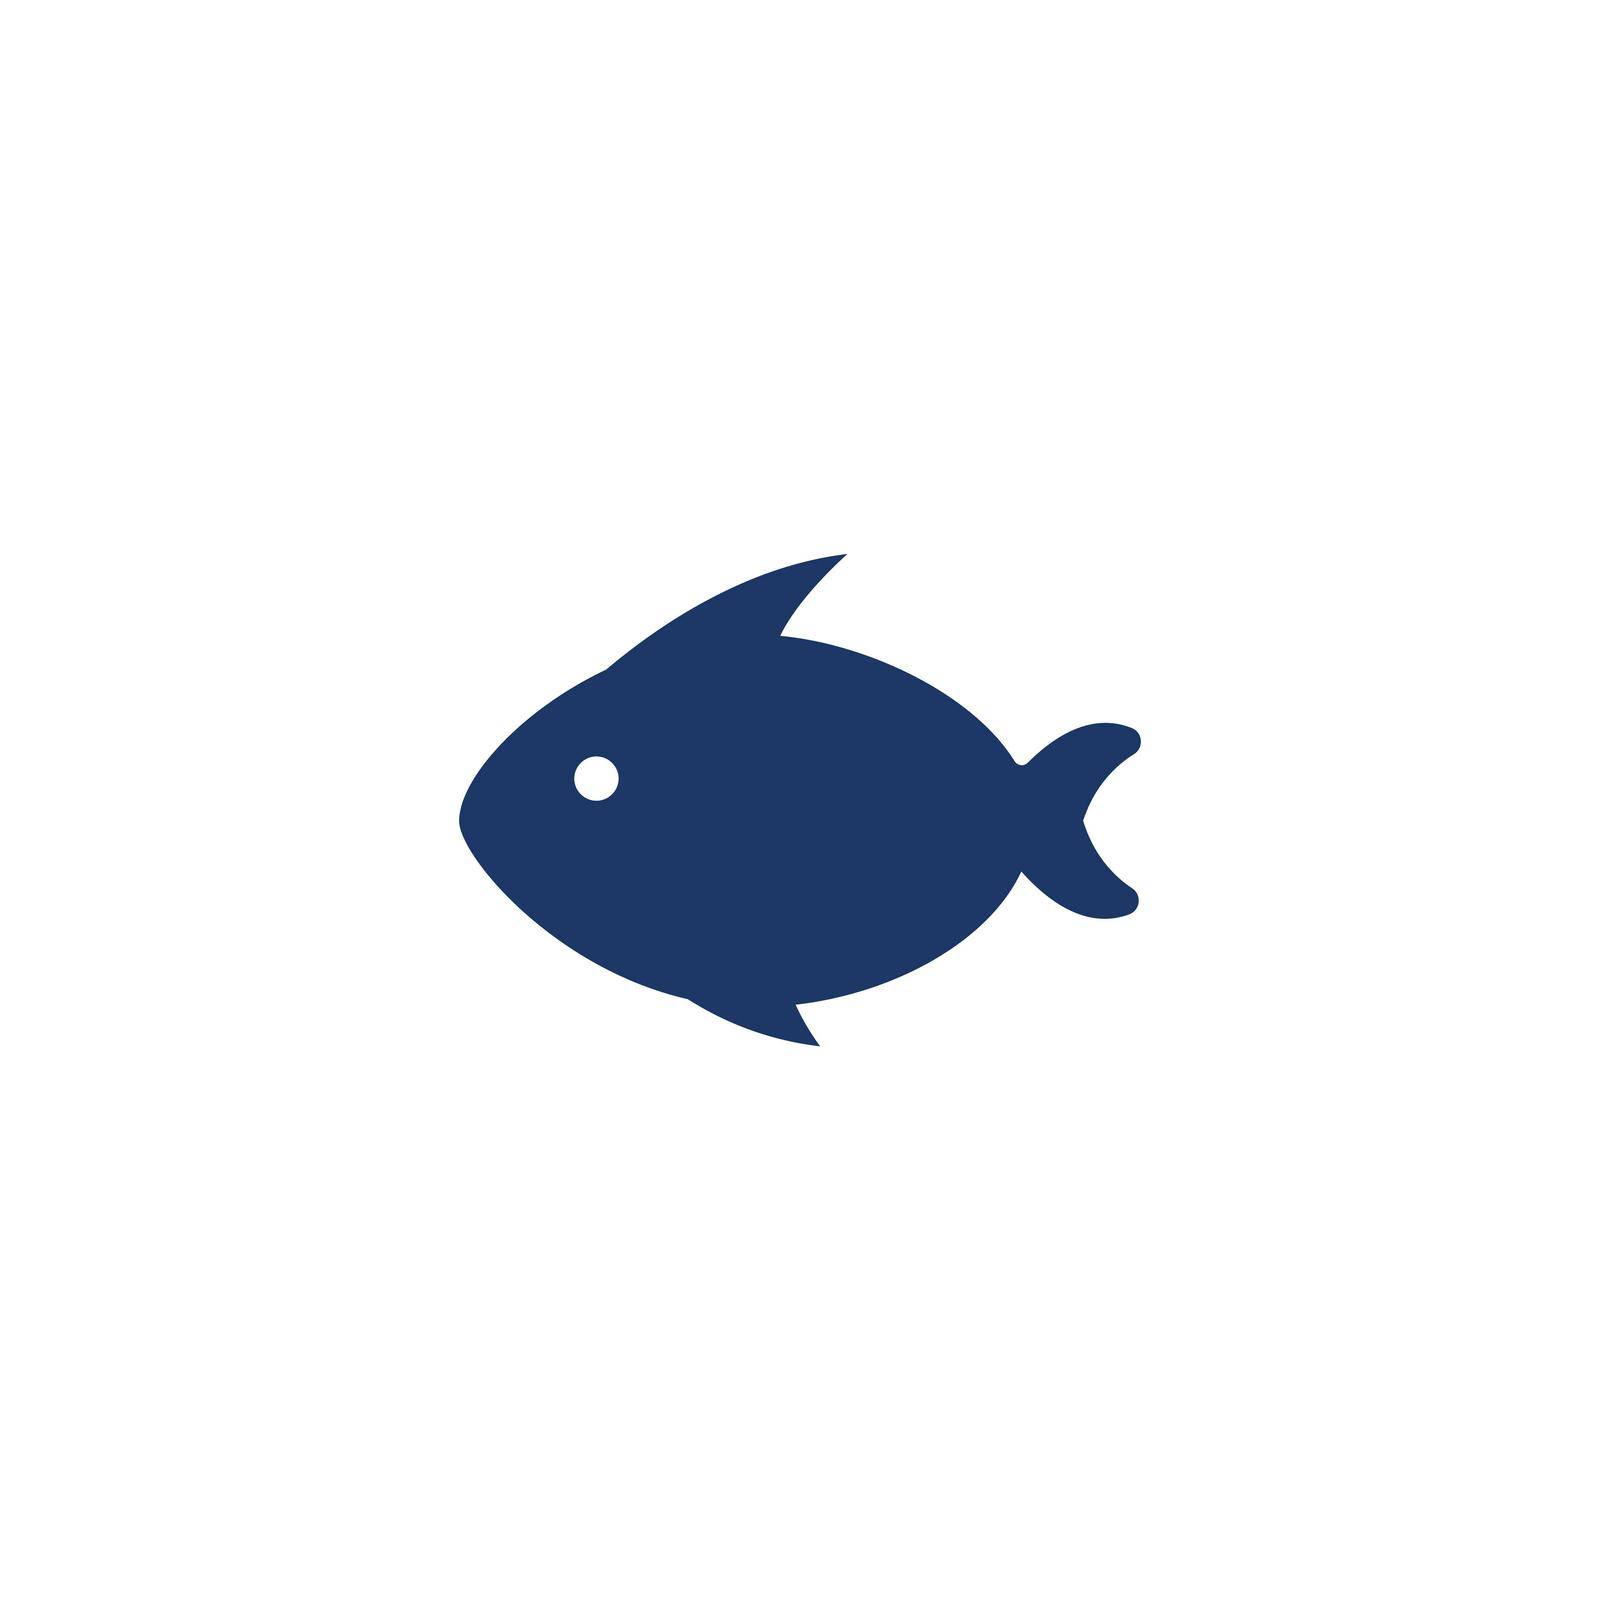 fish logo by rnking